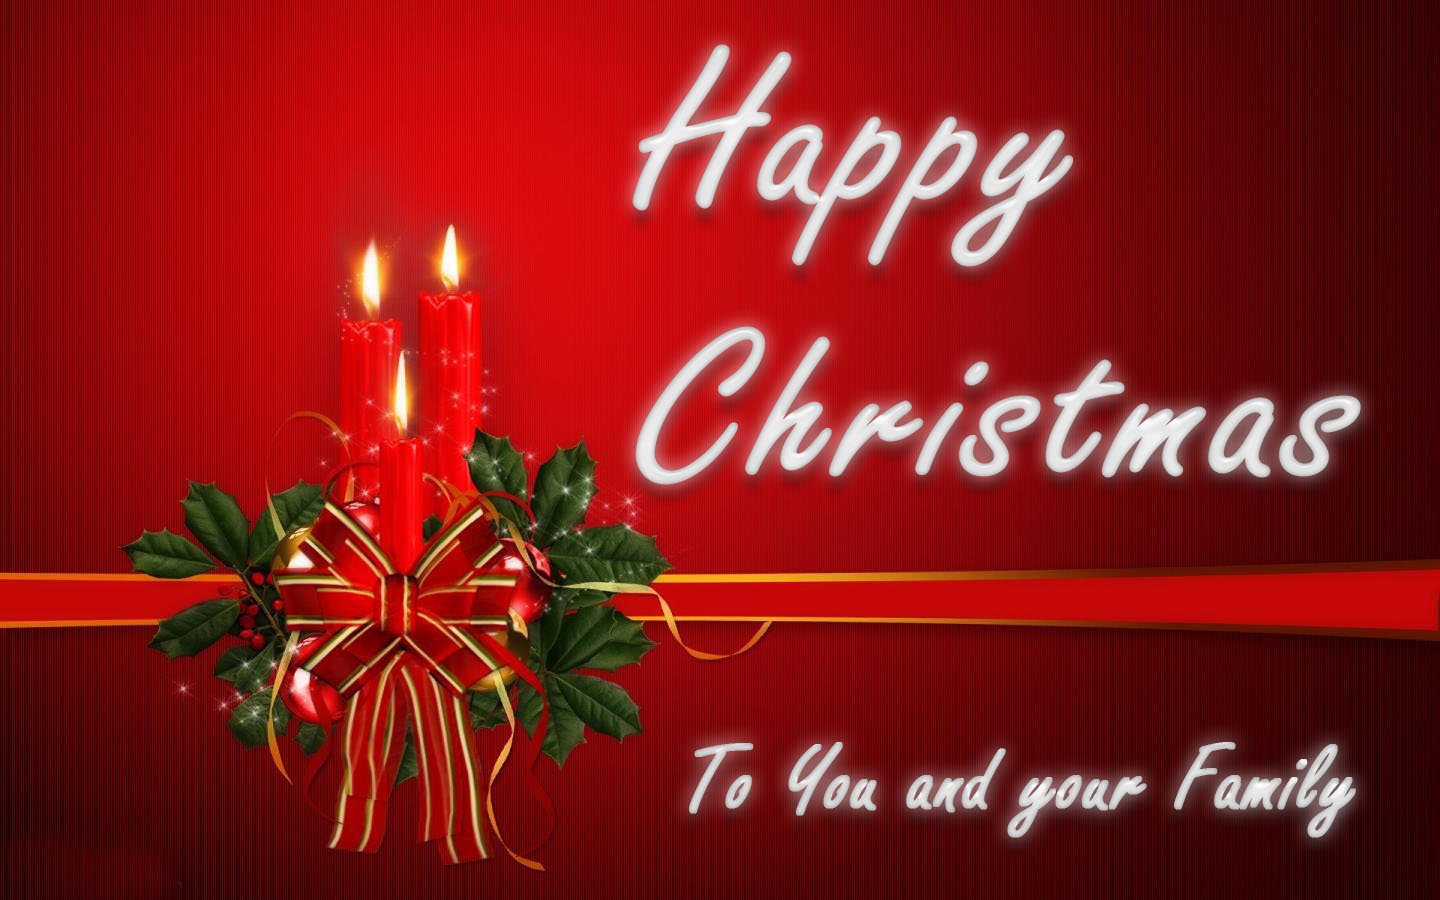 ... Family Christmas Greetings e Cards Online Christmas Greetings Xmas 003